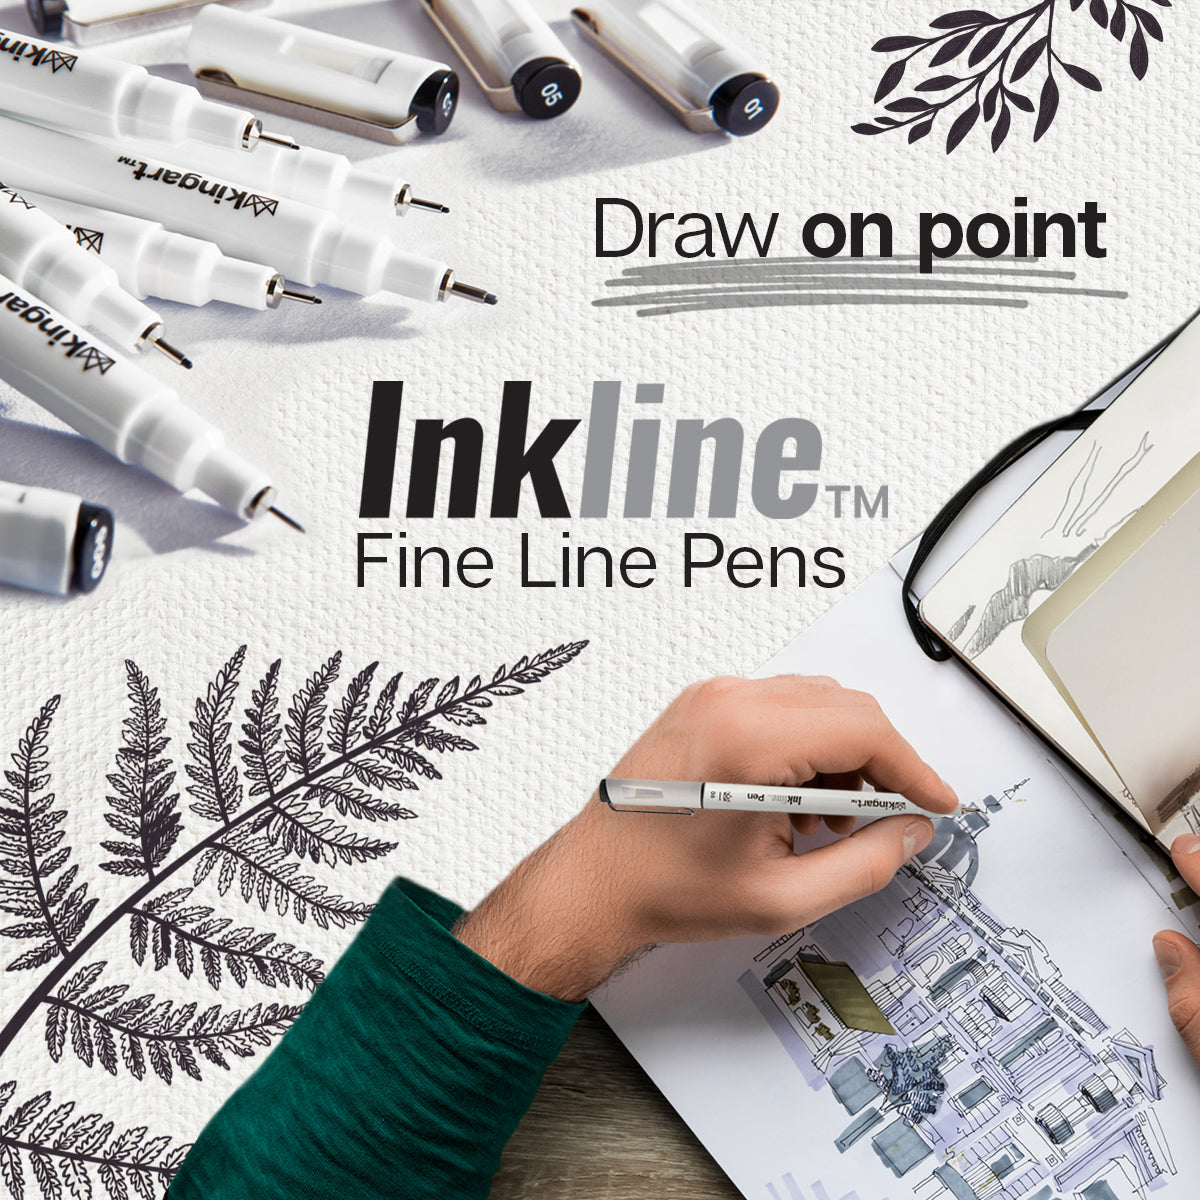 KINGART® Inkline™ Fine Line Art & Graphic Pens, Archival Japanese